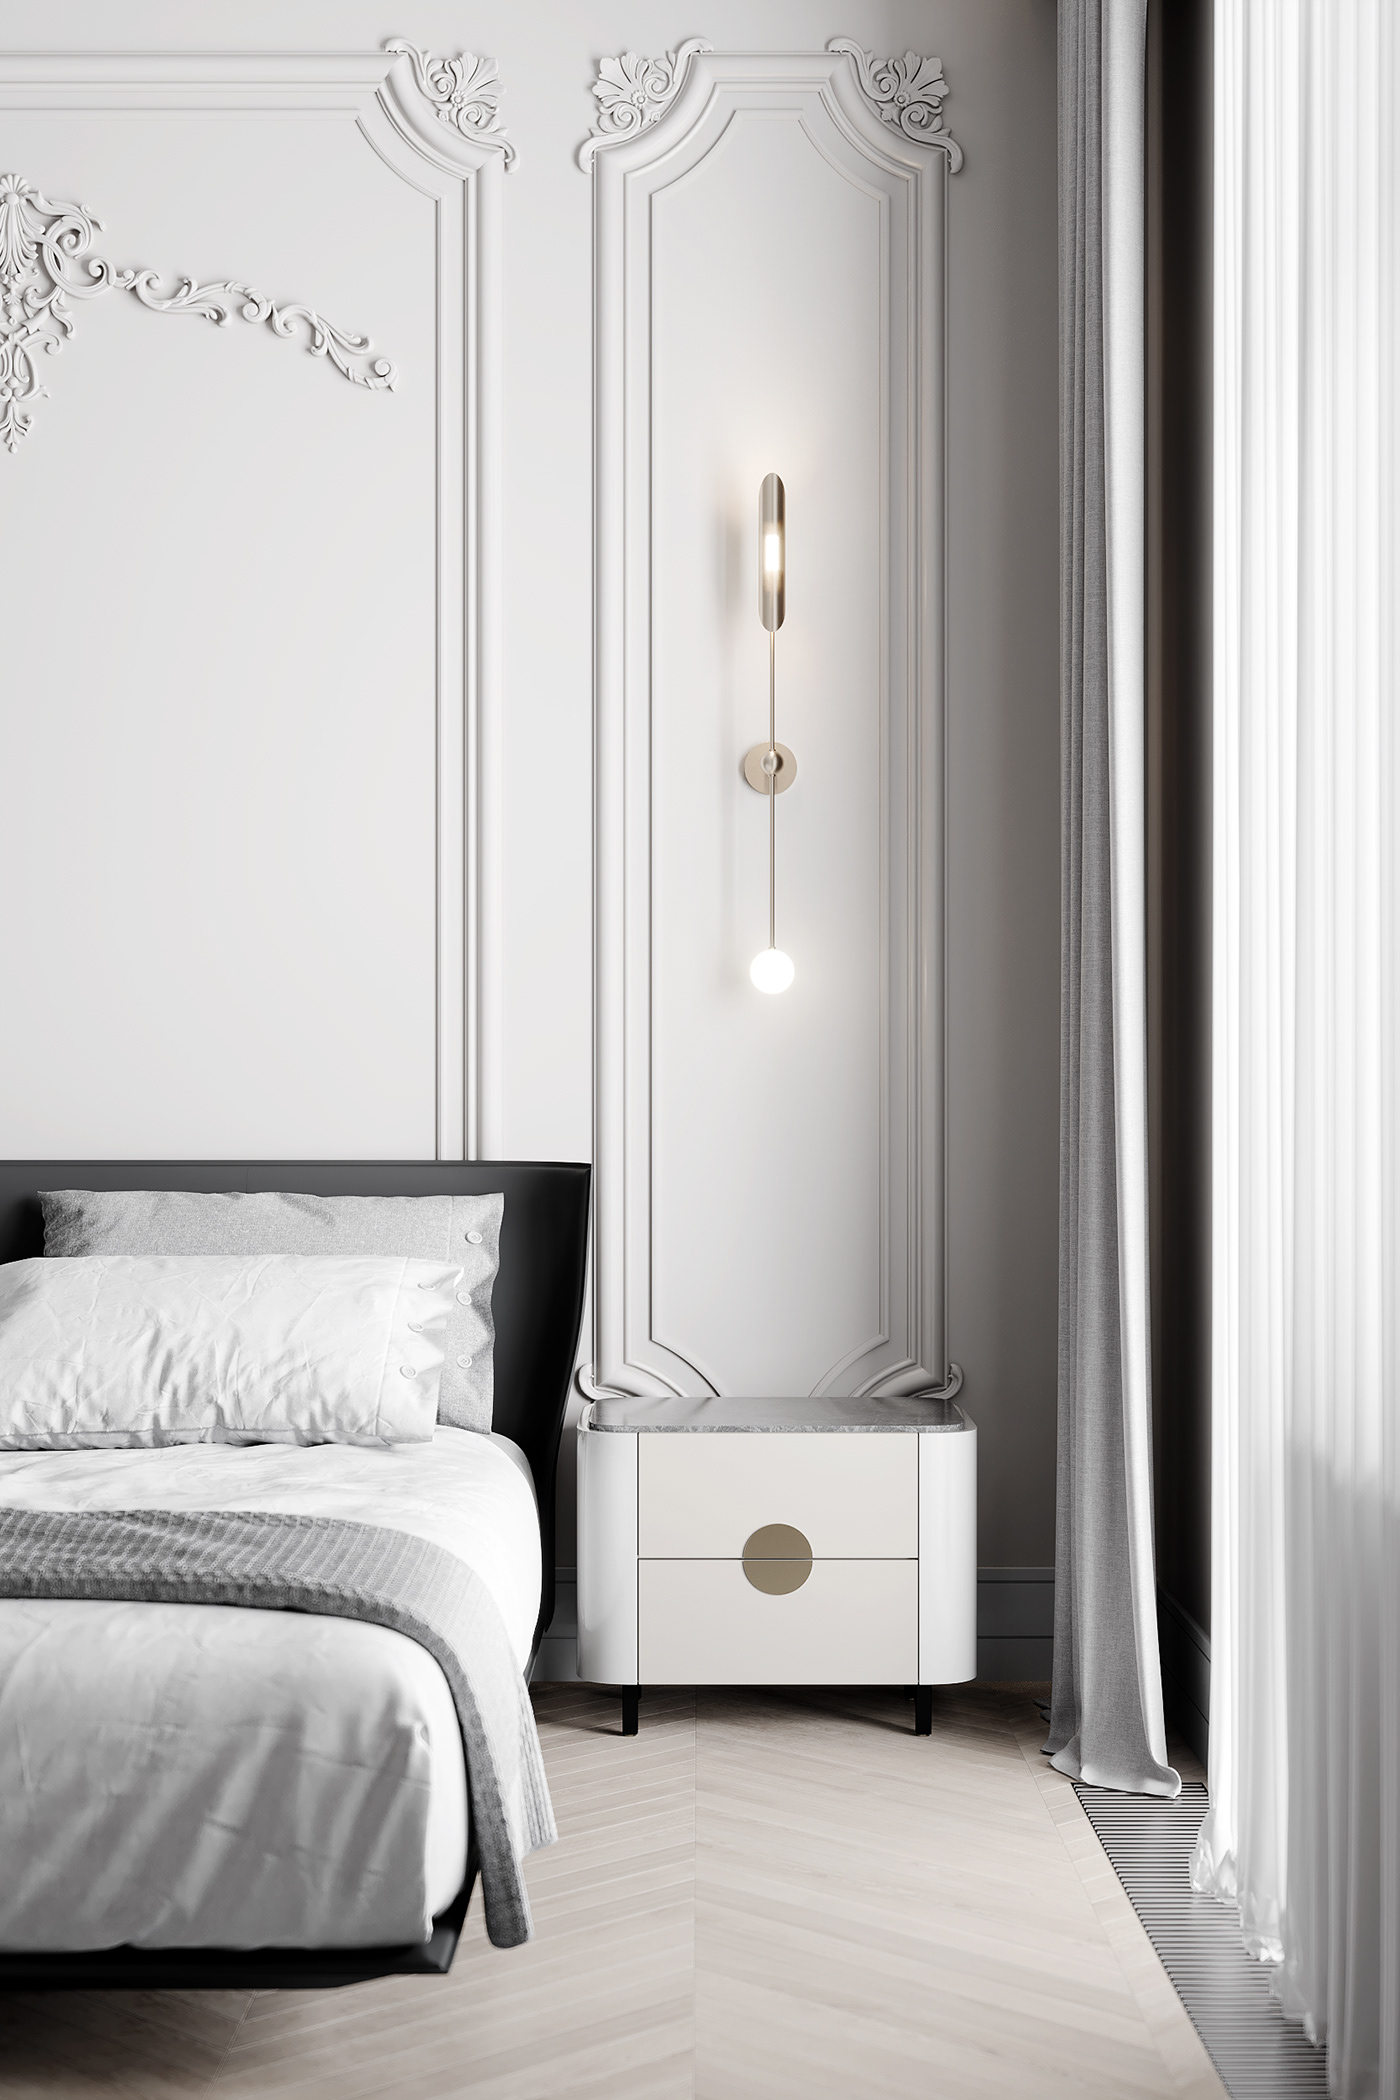 Minimalism Interior bedroom Classic modern apartment visualiation design спальня дизайн